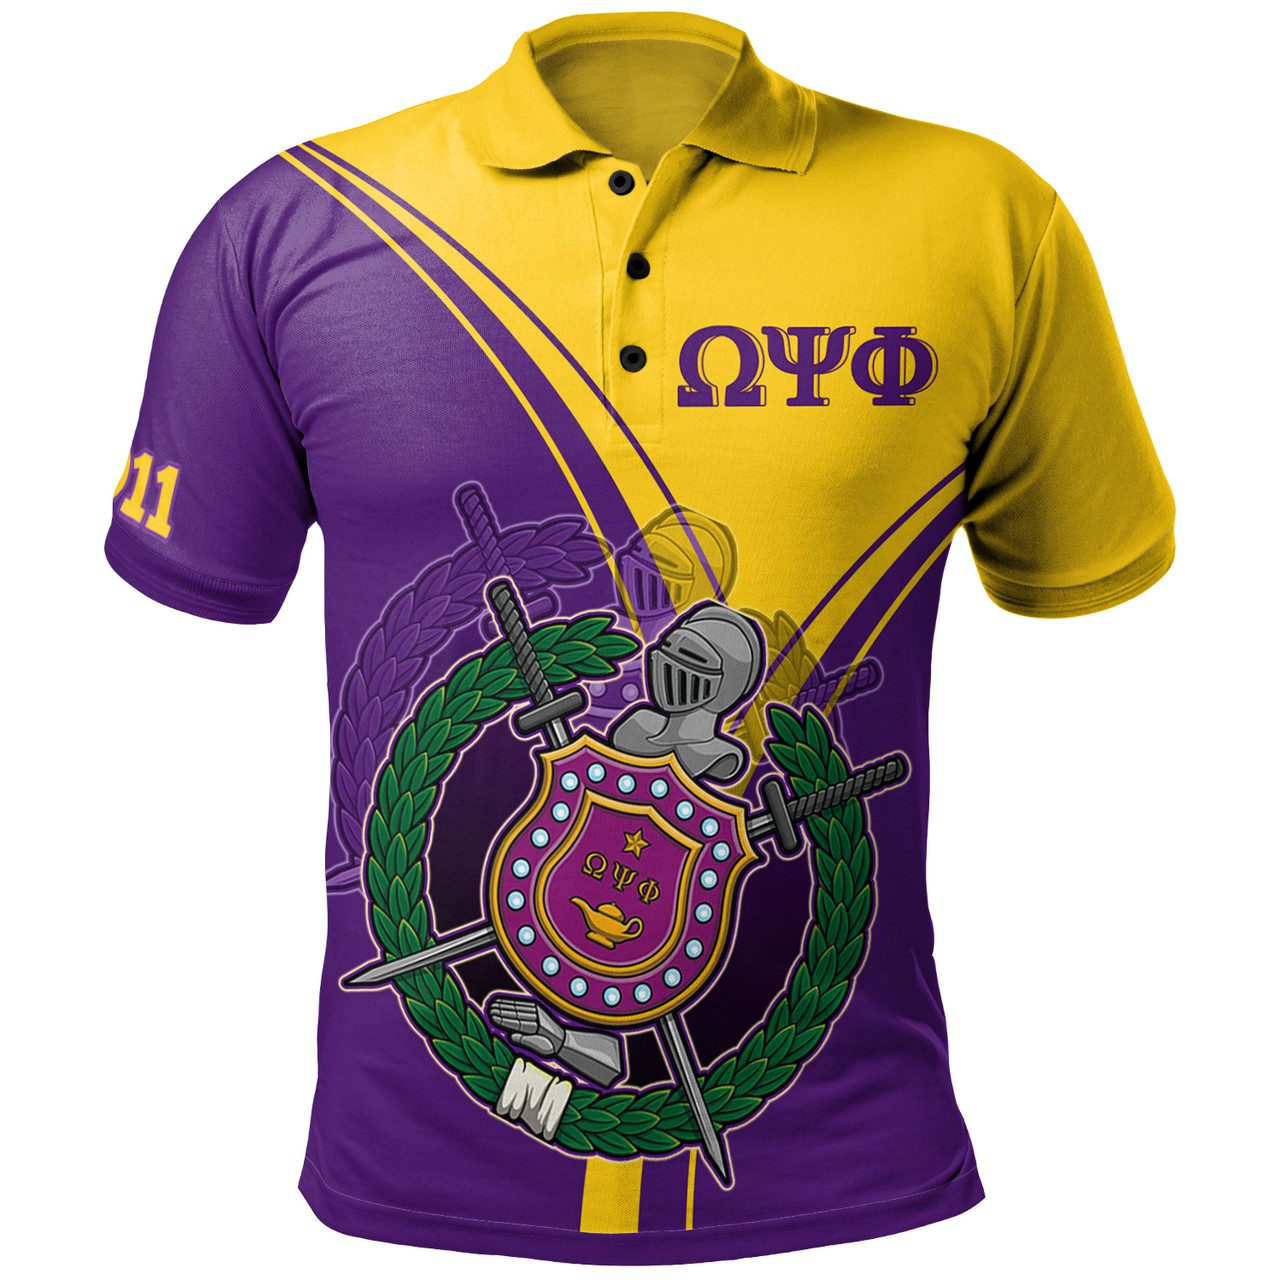 Omega Psi Phi Polo Shirt – Fraternity Omega Psi Phi Pride Version Polo Shirt